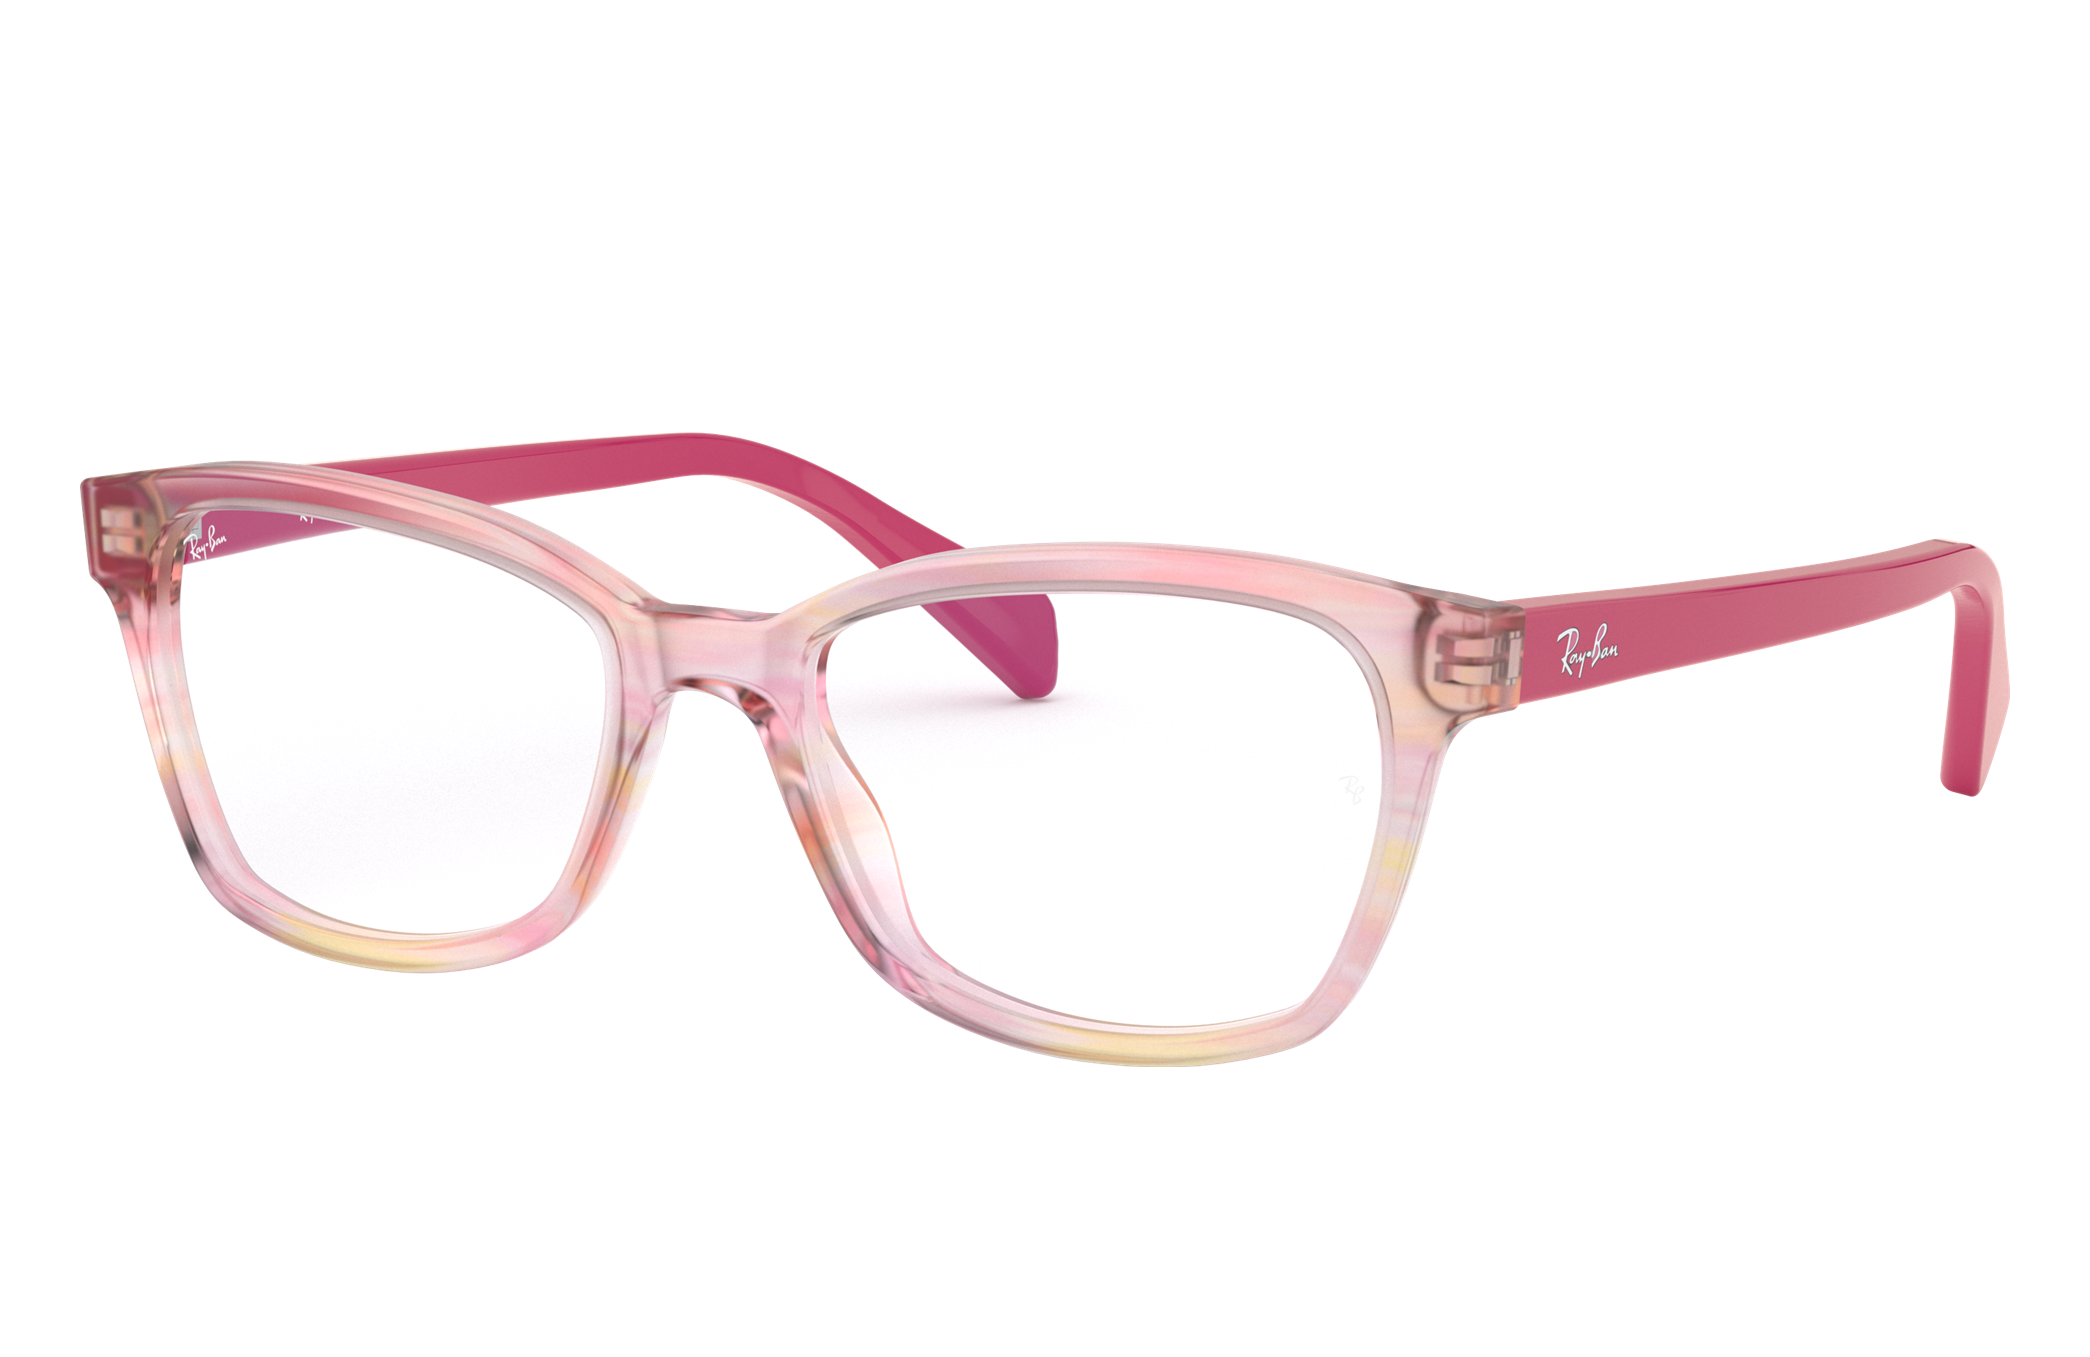 Rb1591 Optics Kids Eyeglasses with Striped Fuxia Frame | Ray-Ban®